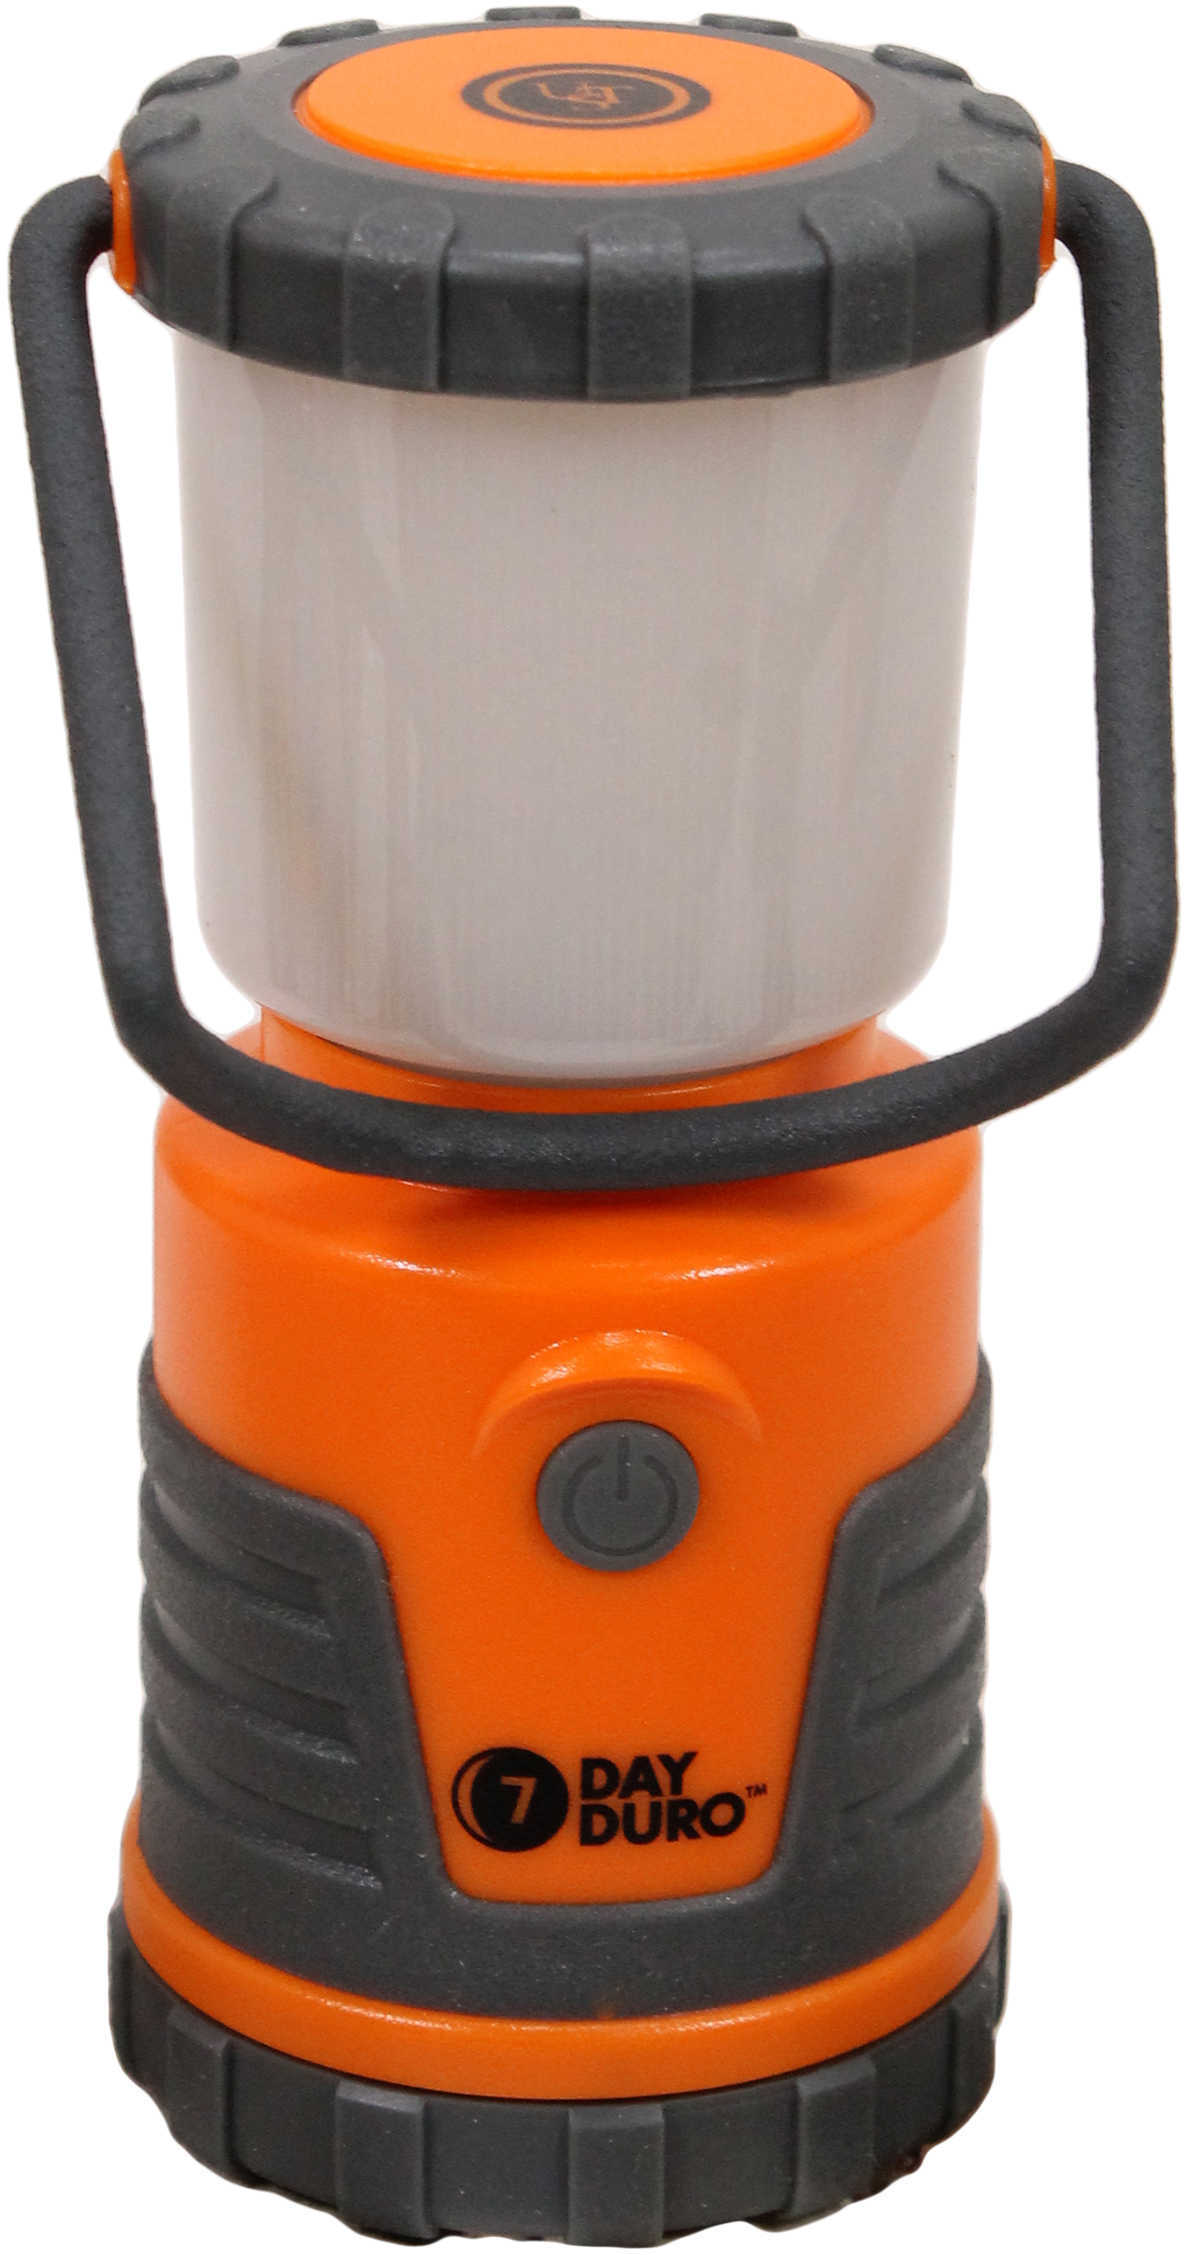 Ultimate Survival Technologies 7-Day Duro LED Lantern, Orange Md: 20-12063